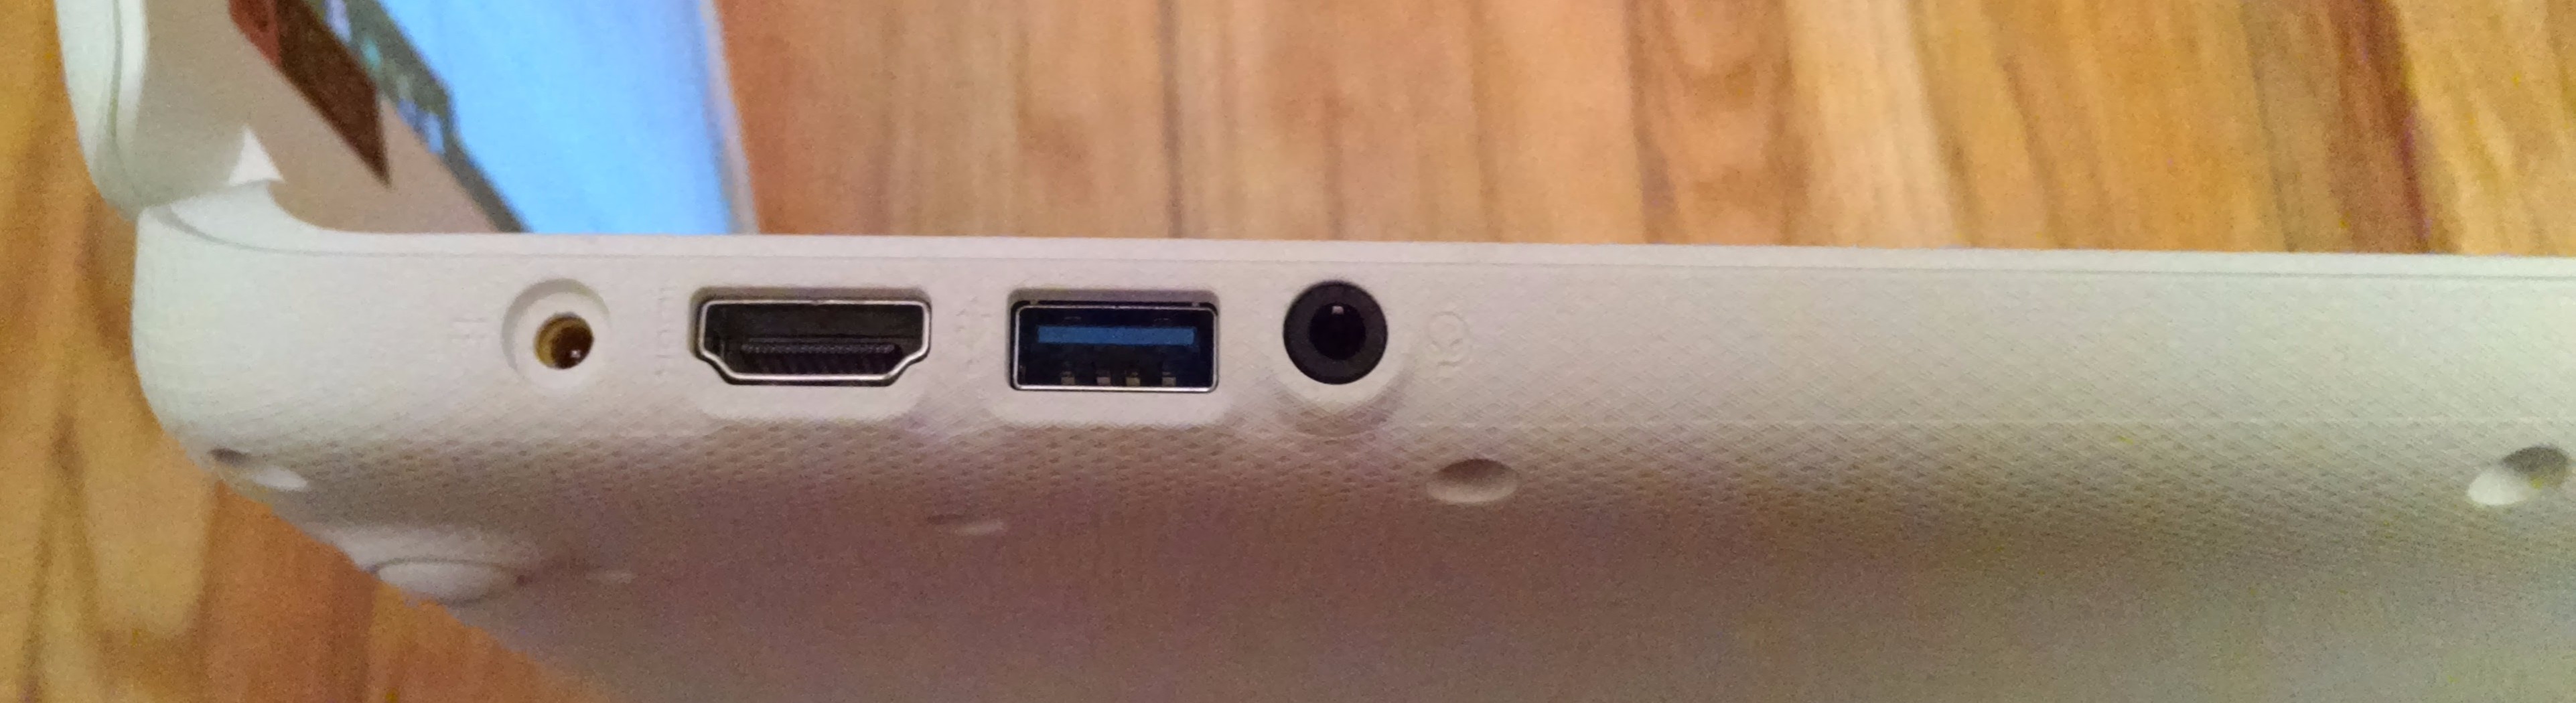 Left-side ports: Power, USB-3, Headphone